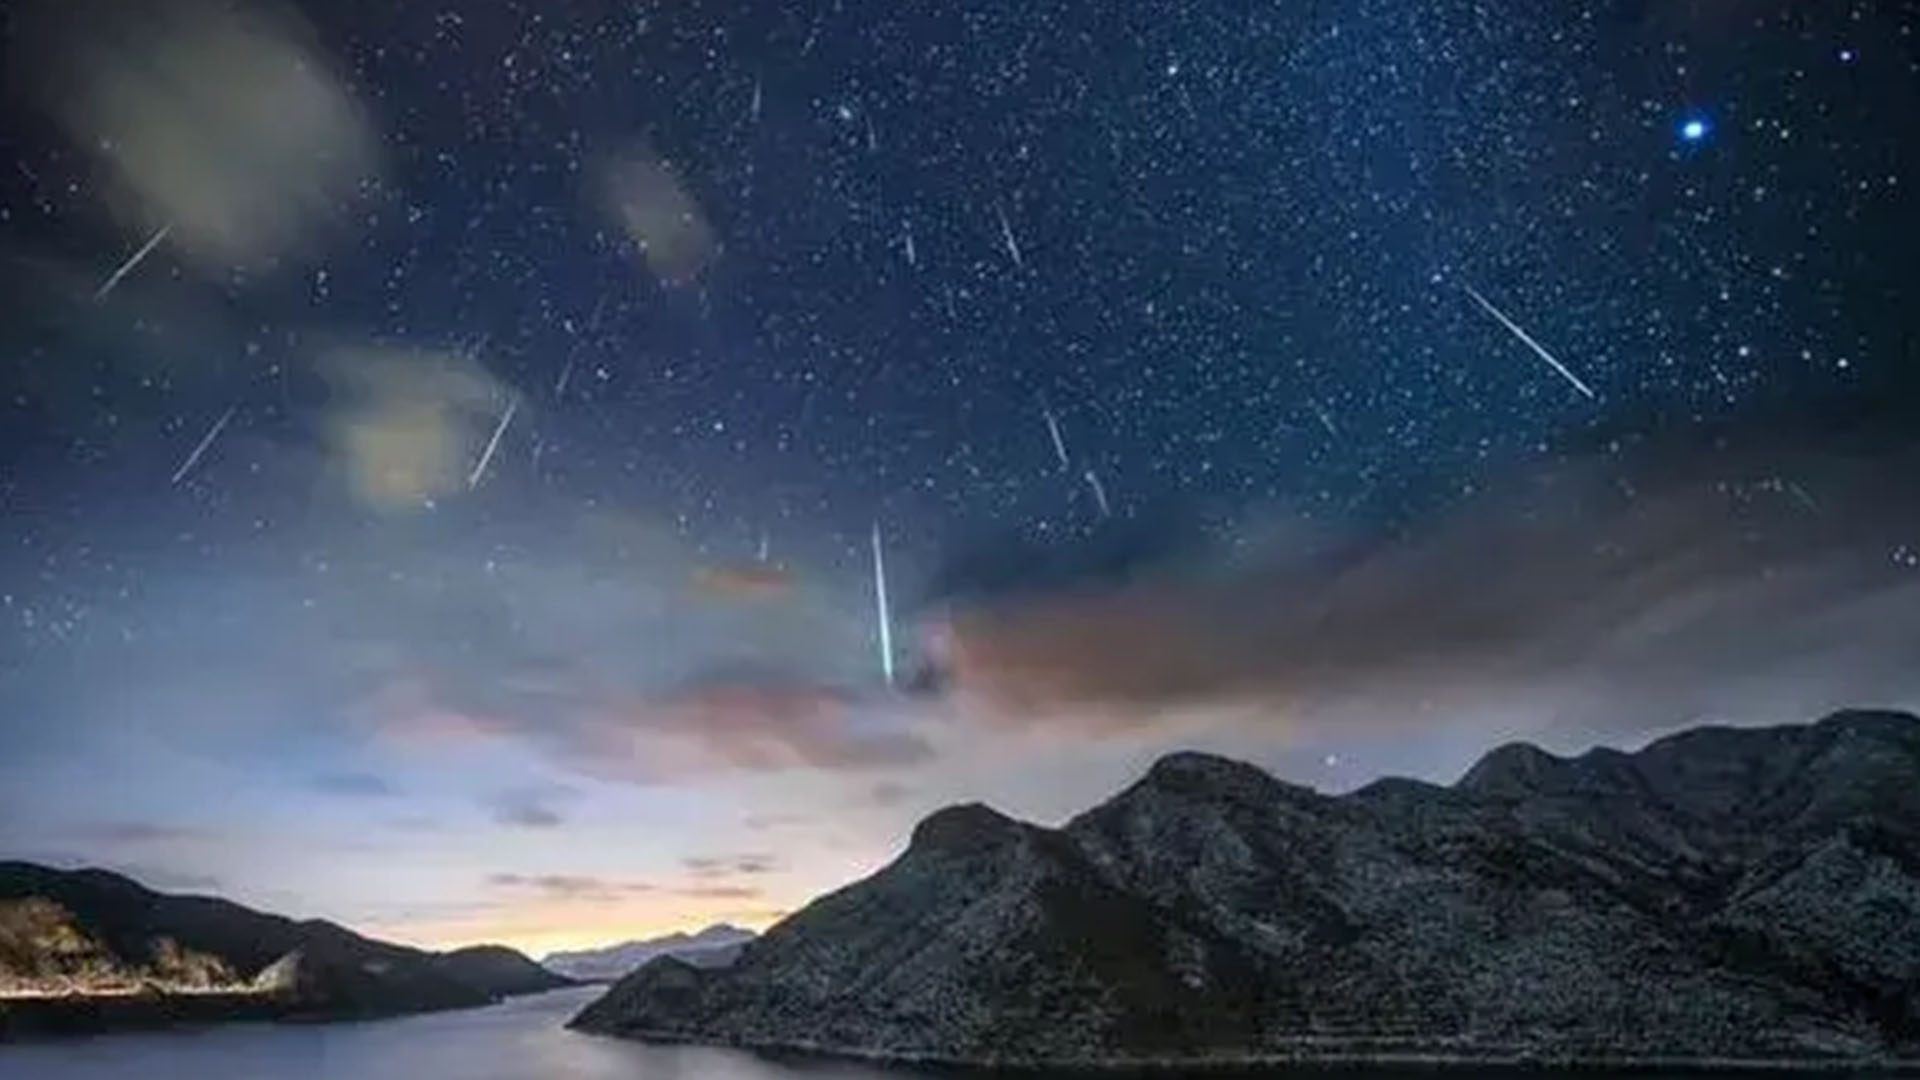 Ursids Meteor Shower in 2019